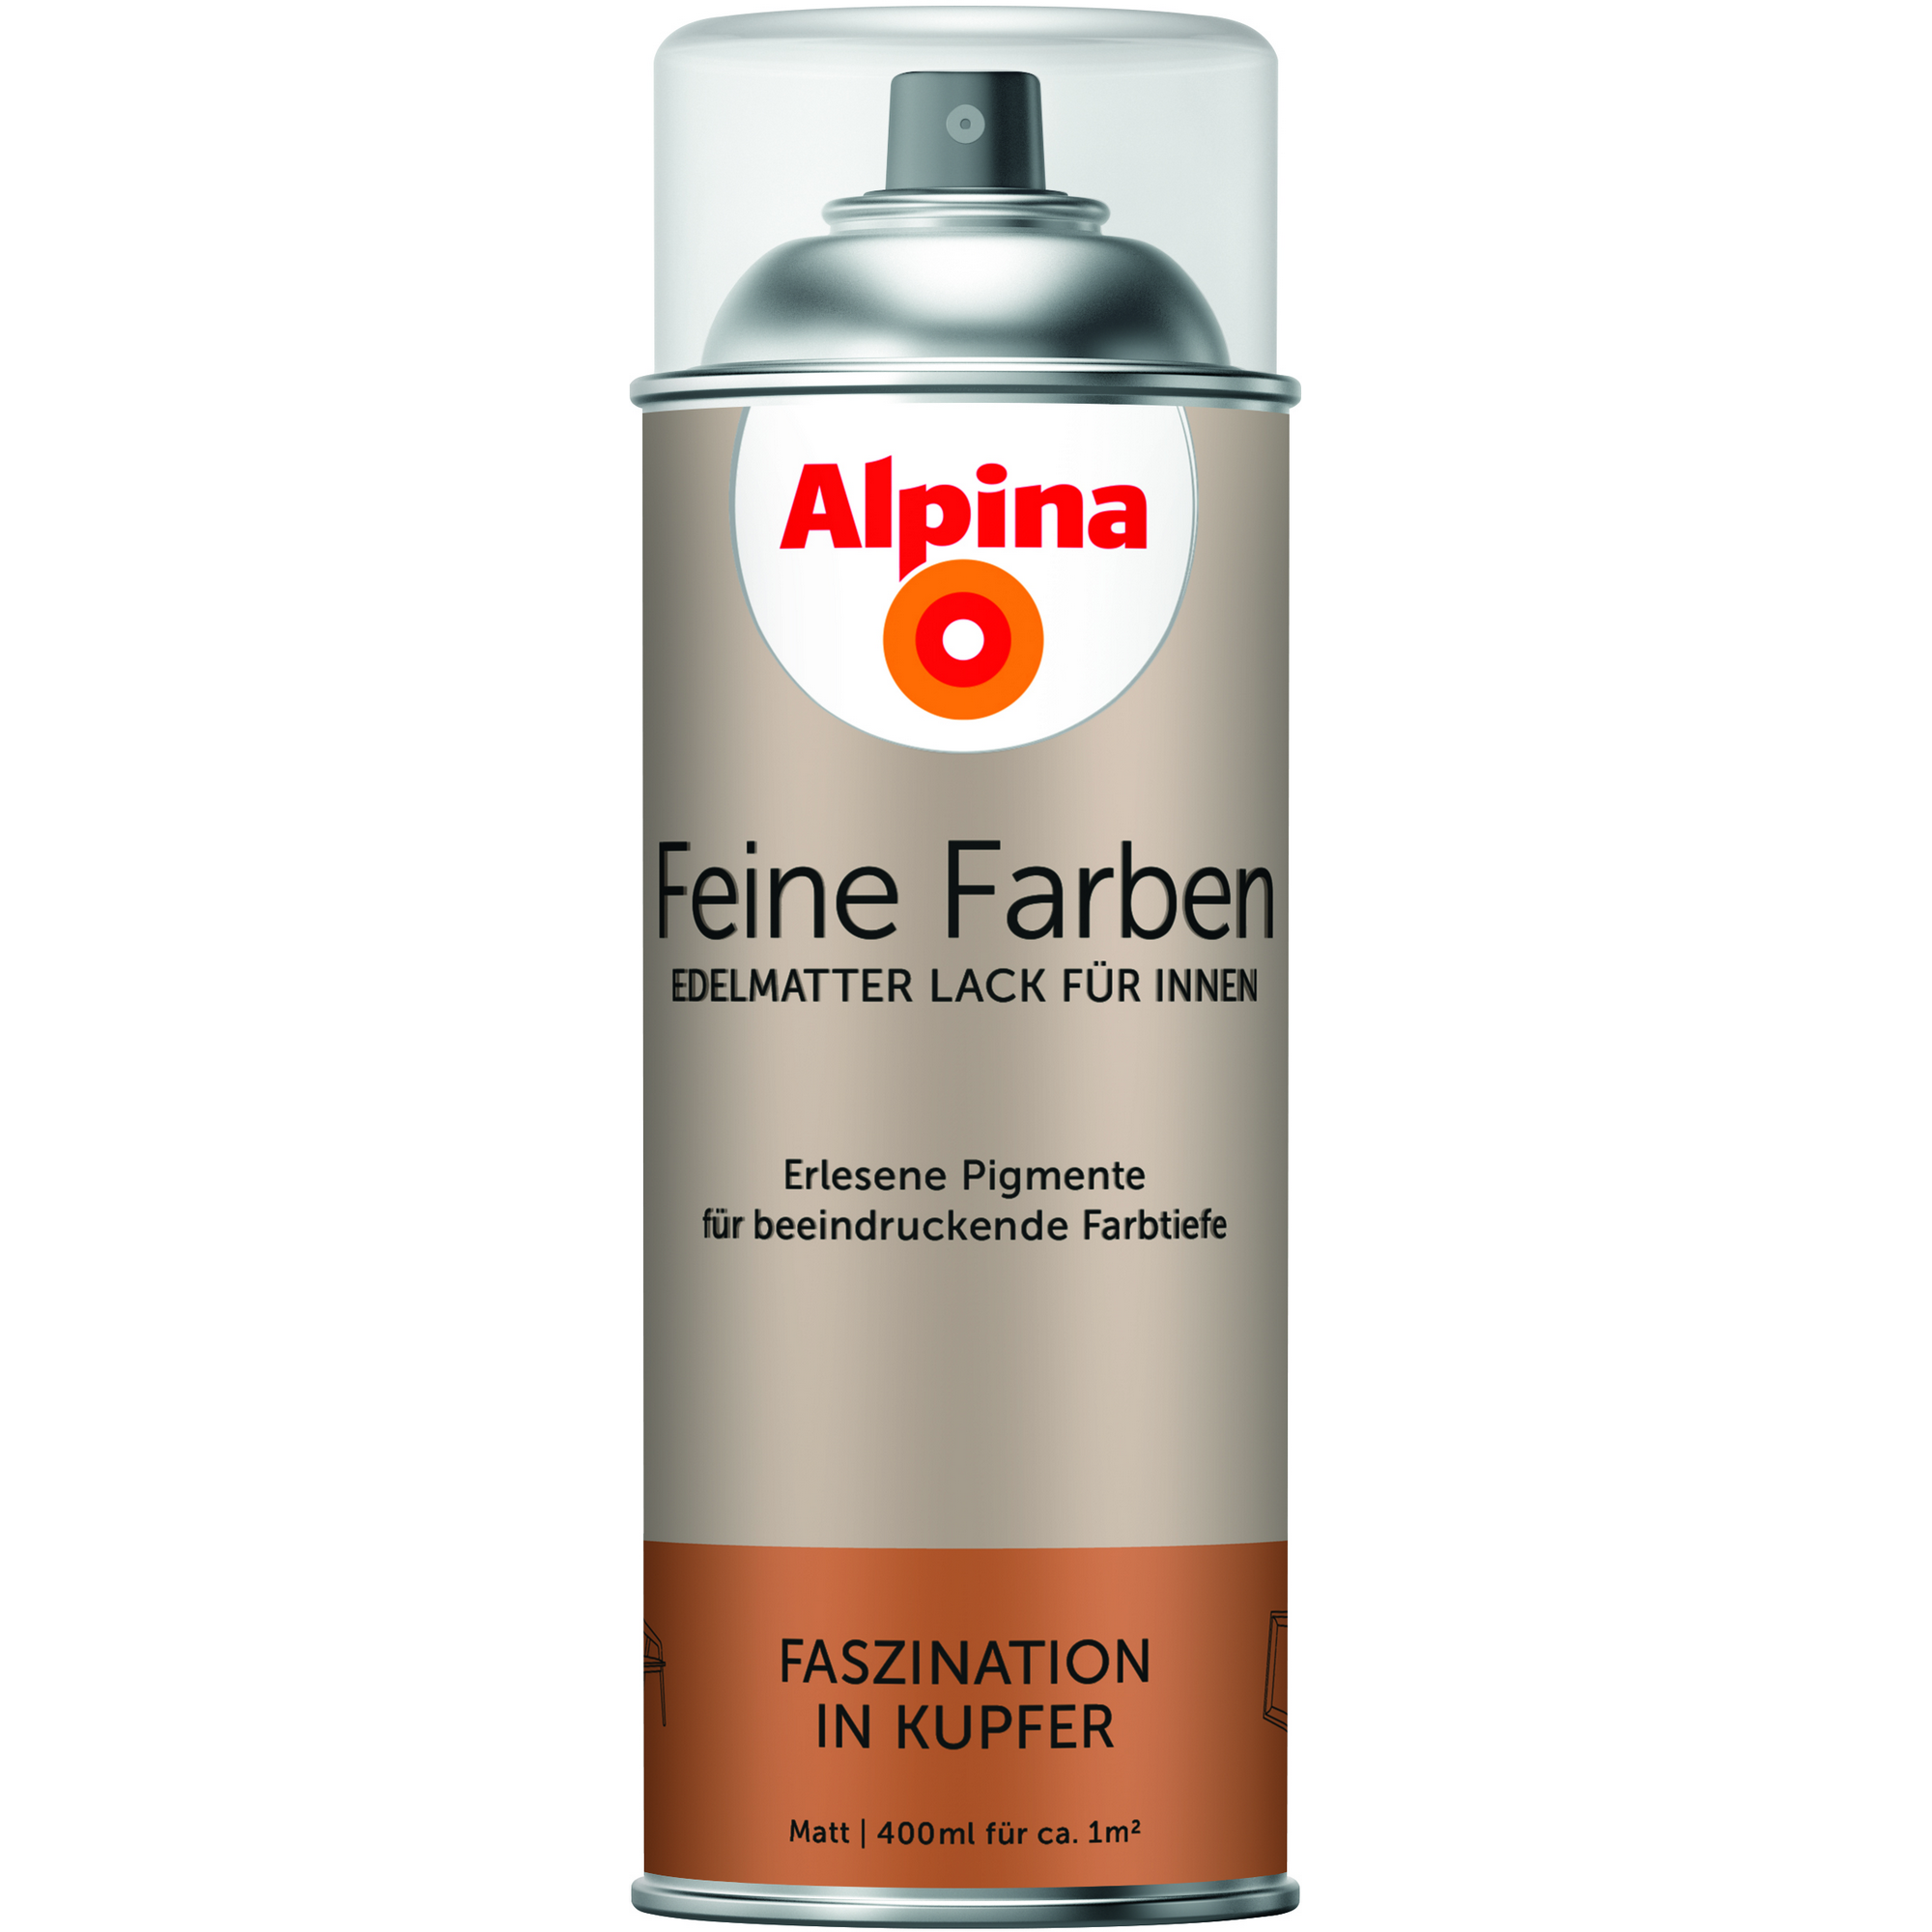 Feine Farben 'Faszination in Kupfer' kupferfarben matt 400 ml + product picture